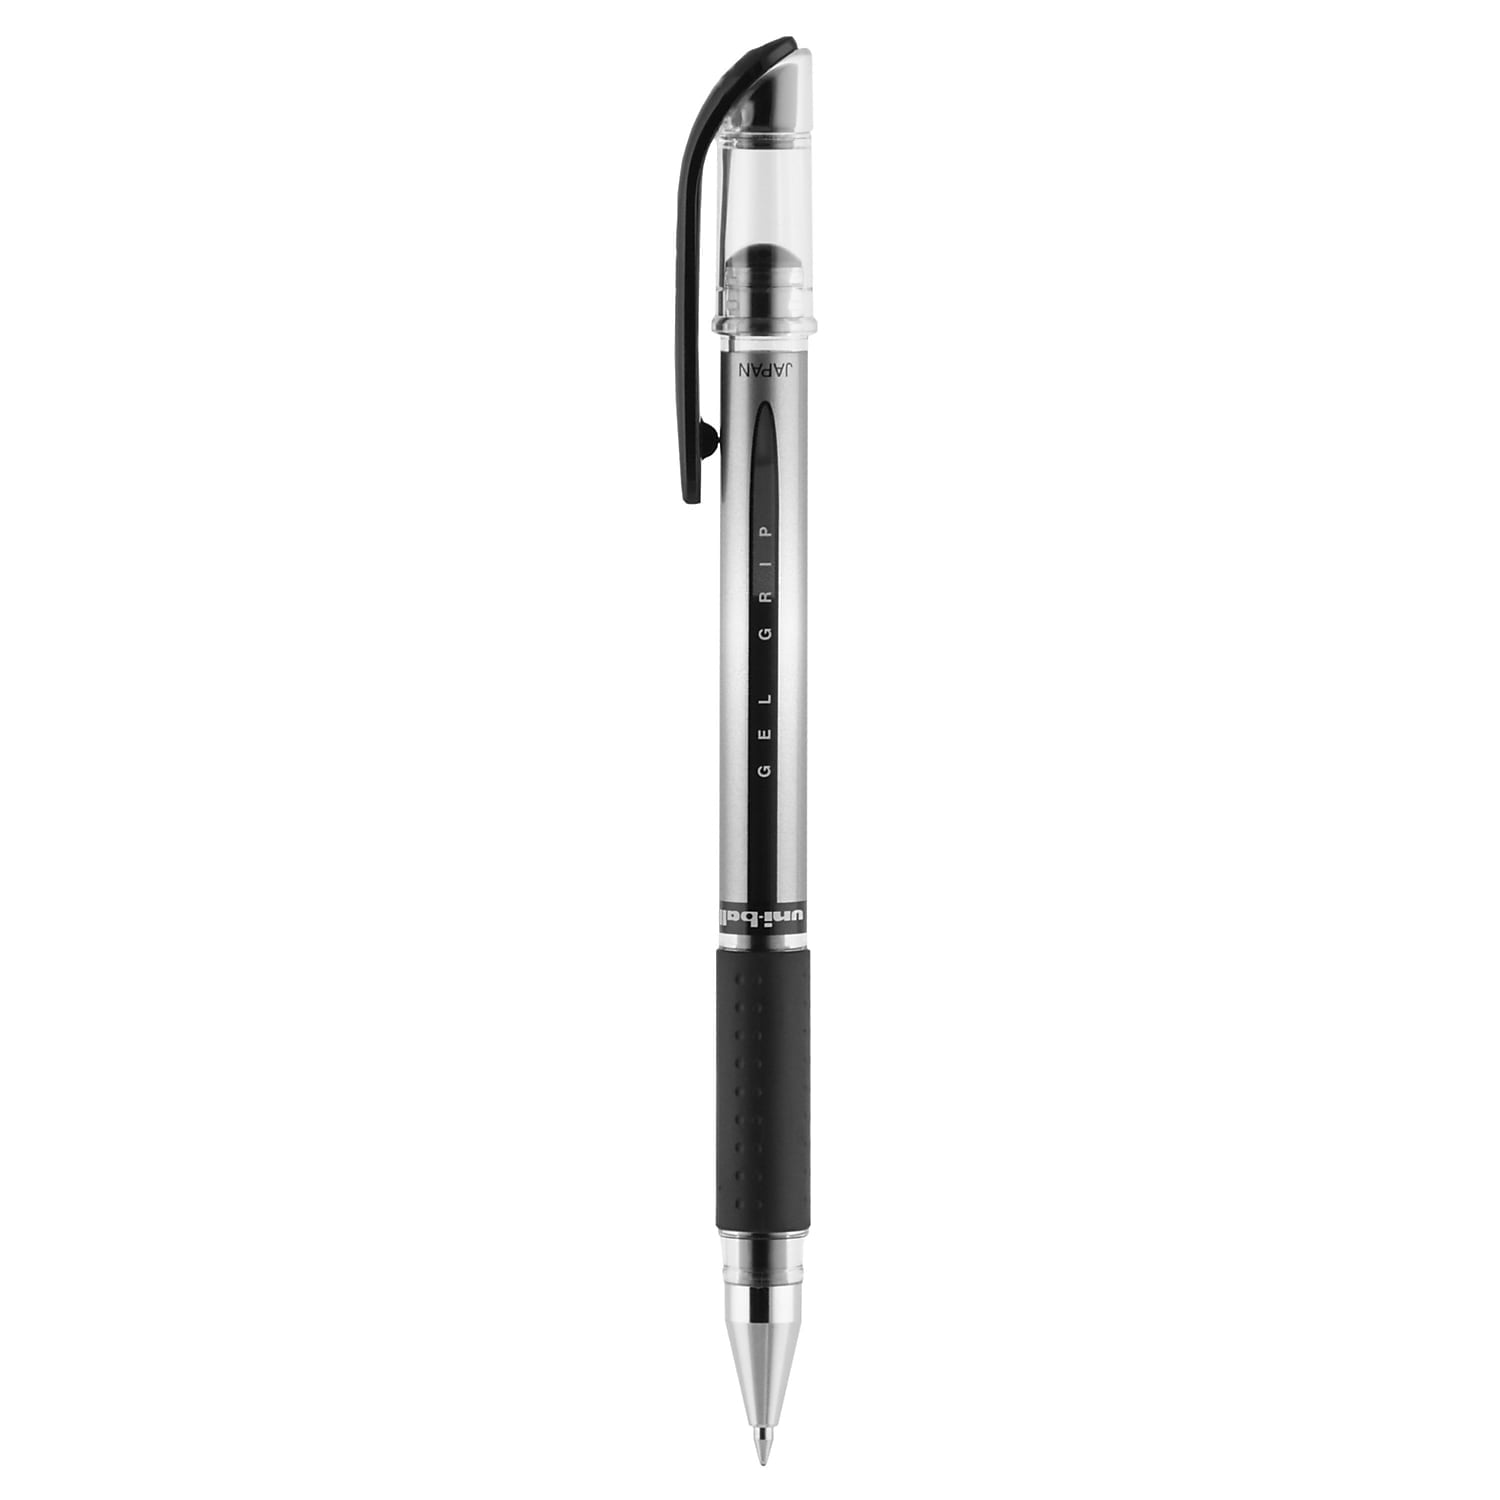 Bolígrafos de gel, paquete de 30 bolígrafos de gel negro de punta fina,  bolígrafos retráctiles de tinta de gel para una escritura suave (0.028 in)